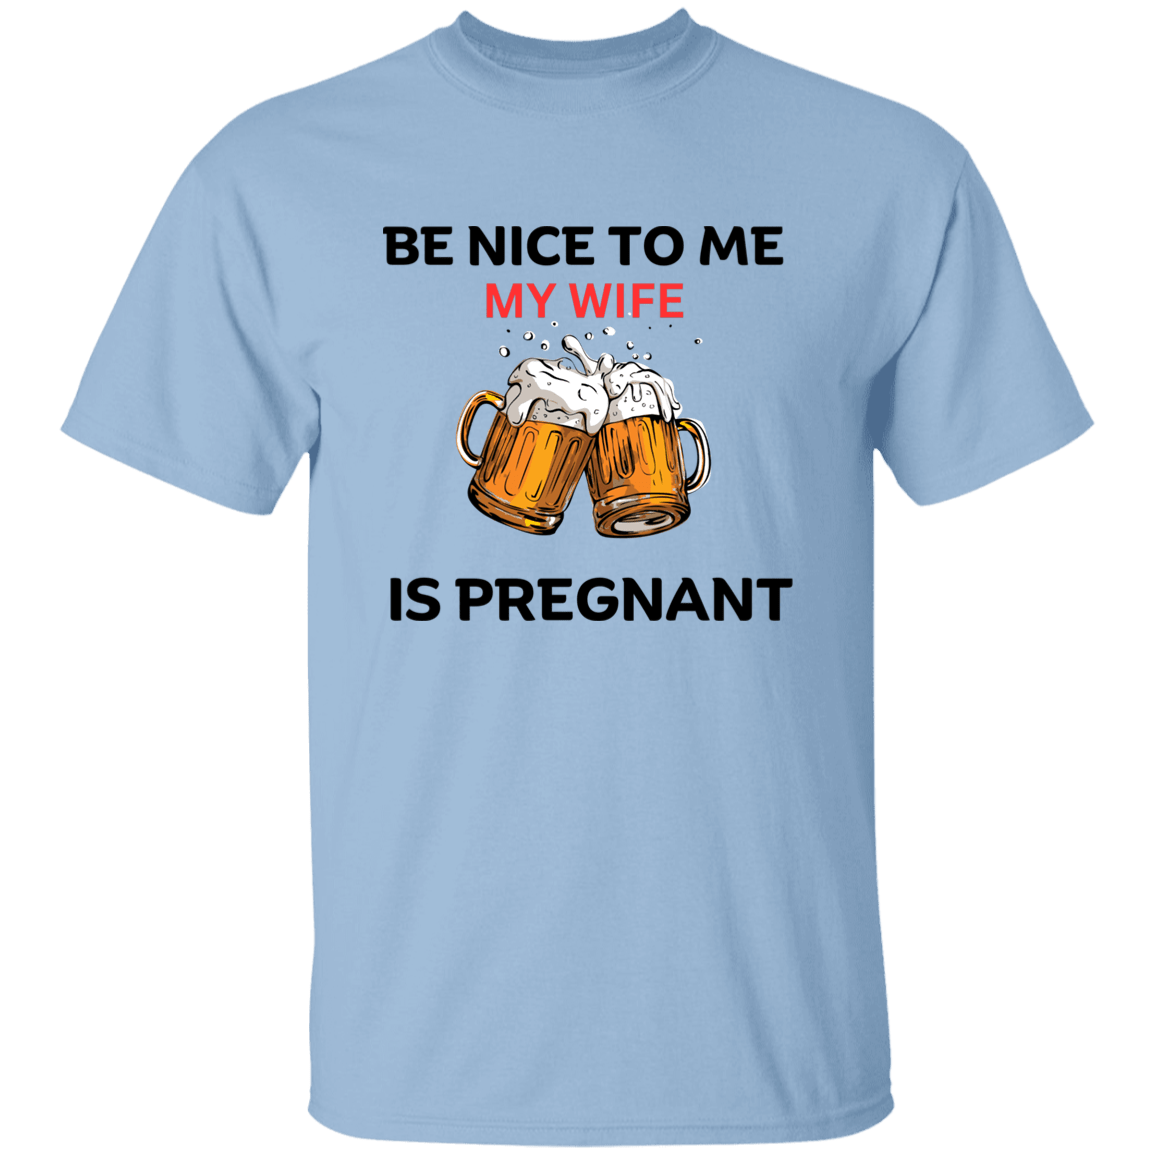 Be Nice To Me T-Shirt